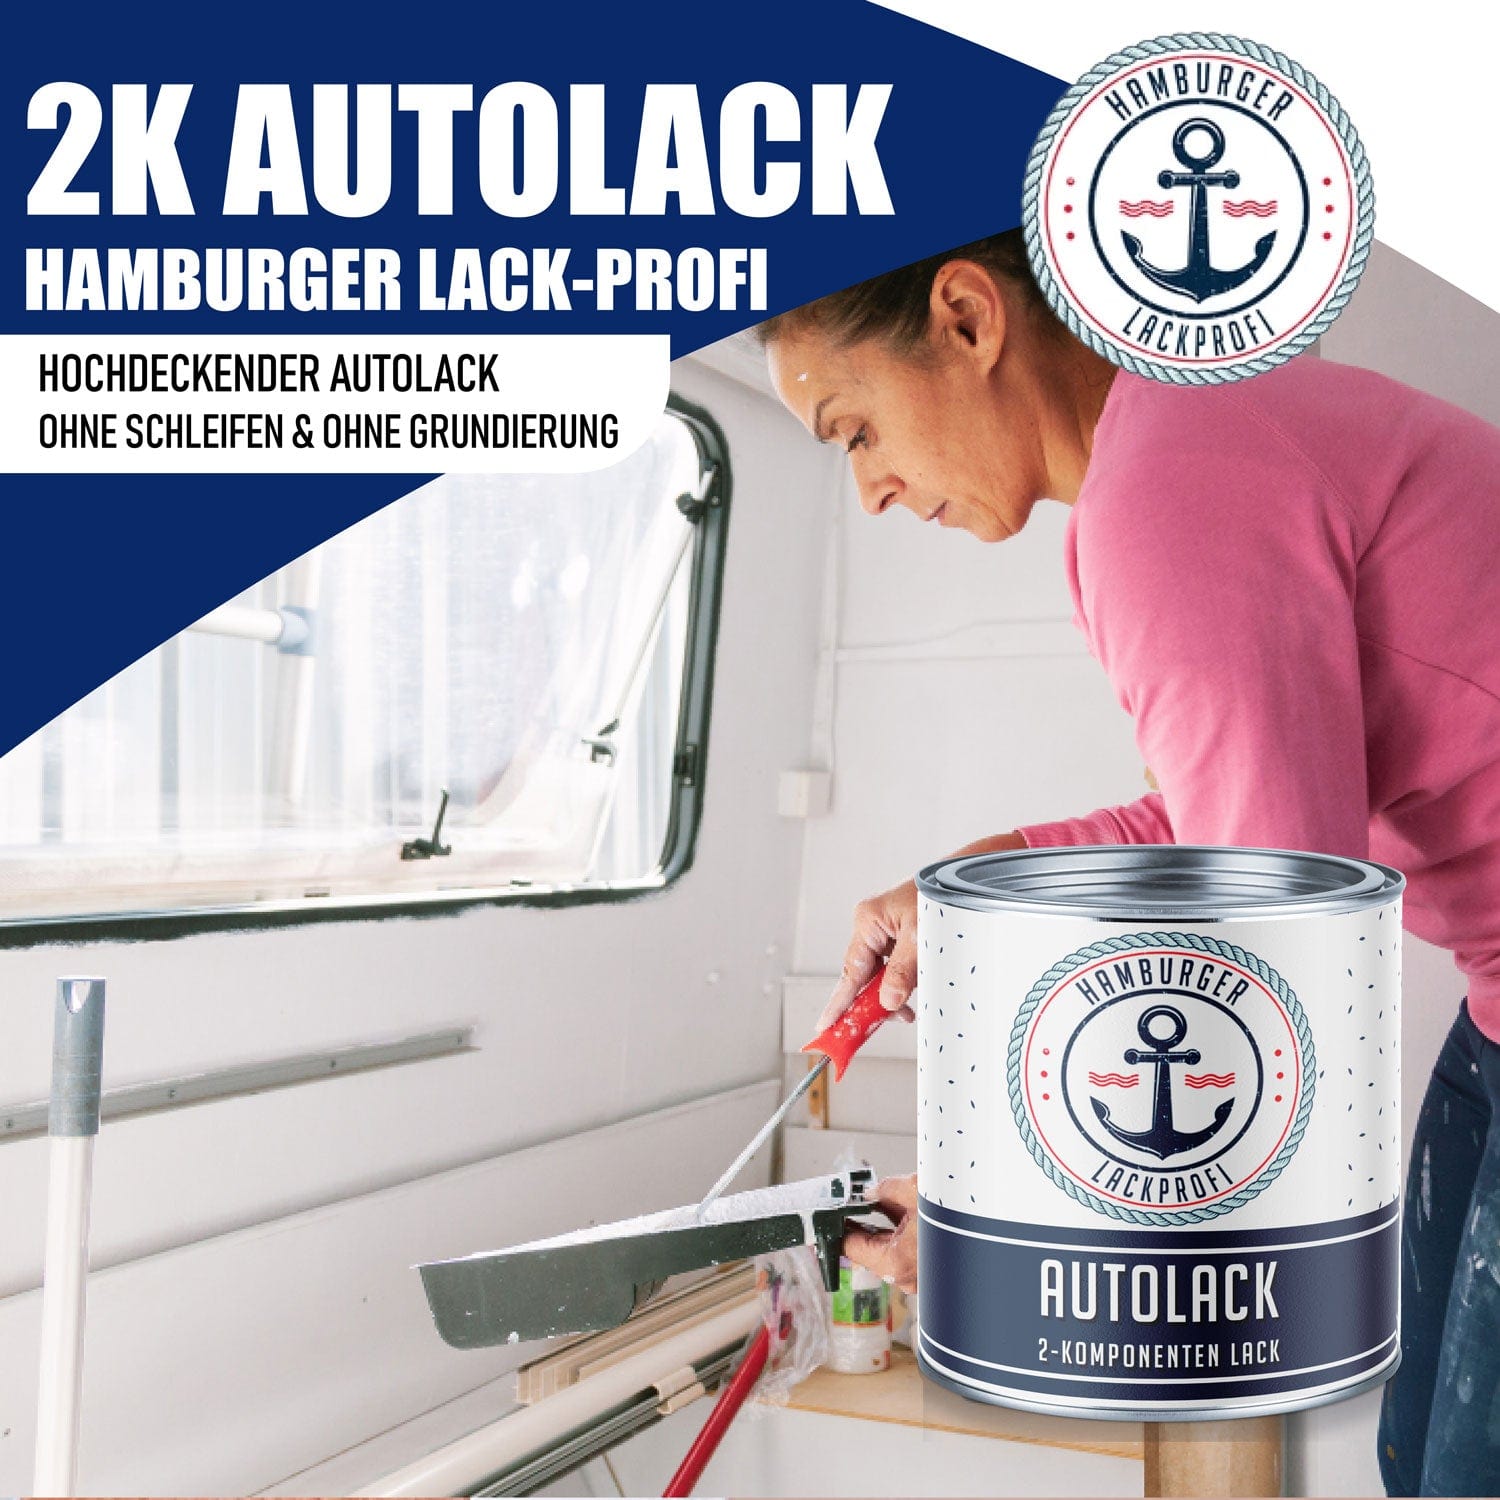 Hamburger Lack-Profi Lacke & Beschichtungen Hamburger Lack-Profi 2K Autolack in Tieforange RAL 2011 mit Lackierset (X300) & Verdünnung (1 L) - 30% Sparangebot